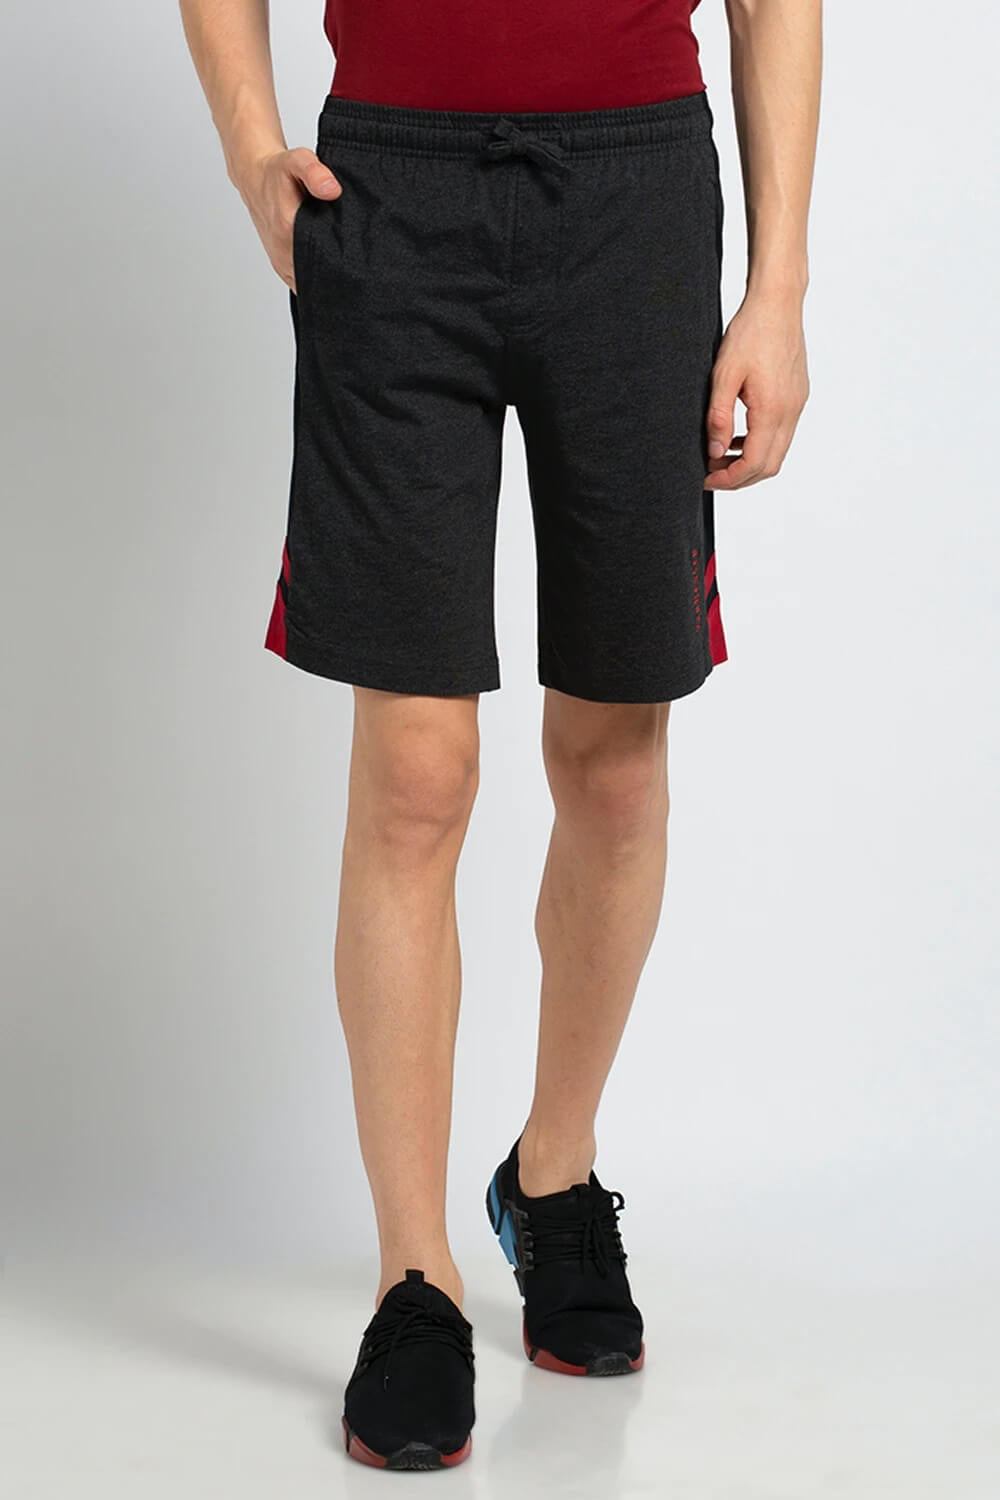 Van Heusen Charcoal Knit Shorts for Men #50006